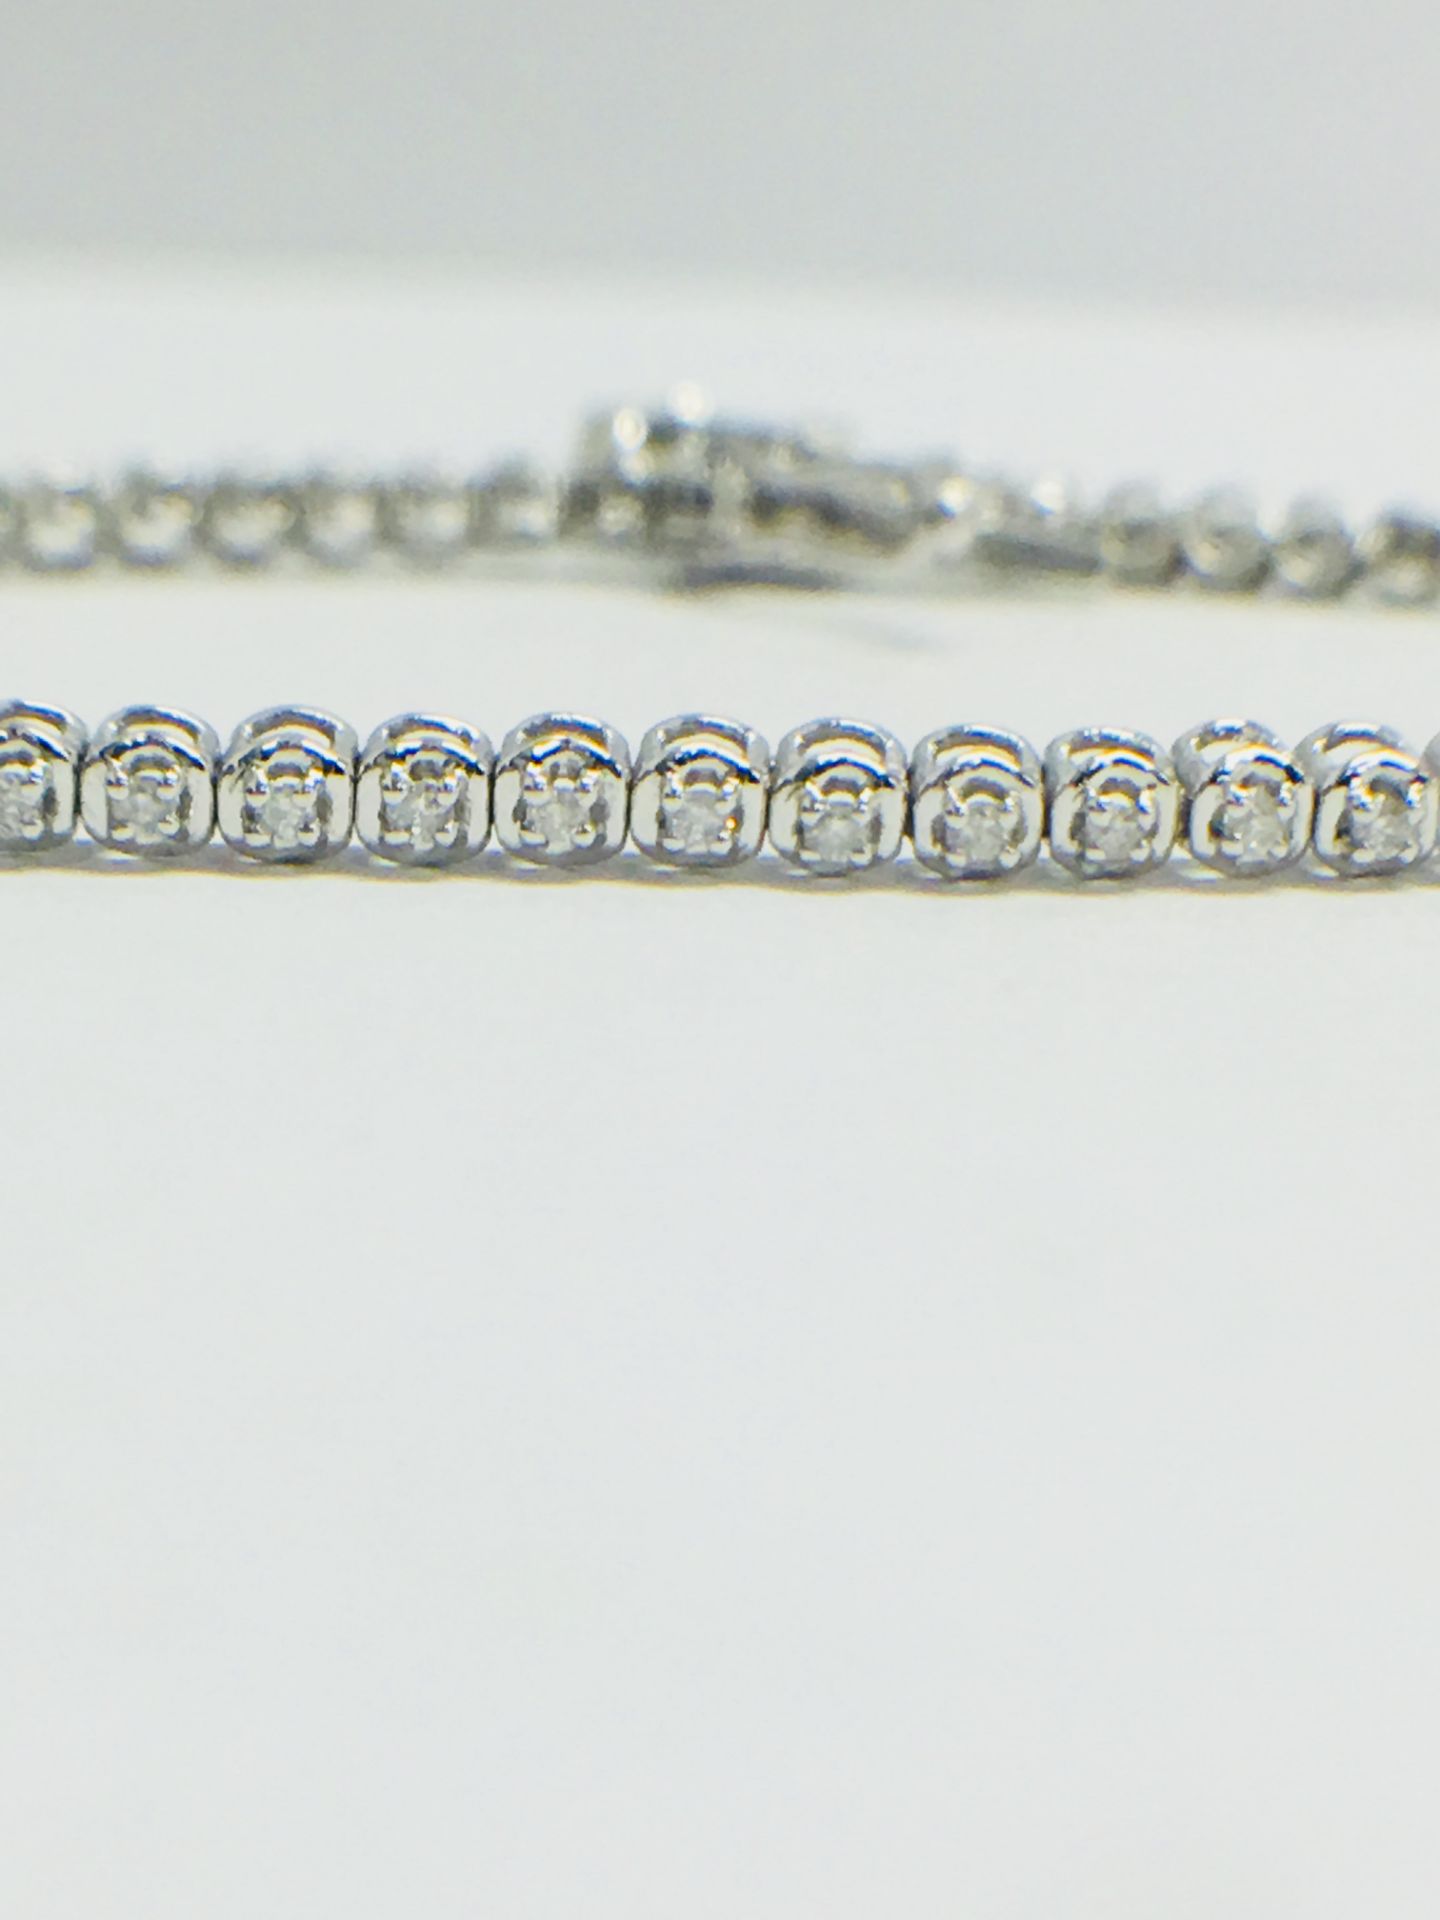 9CT White Gold Diamond Bracelet - Image 2 of 5